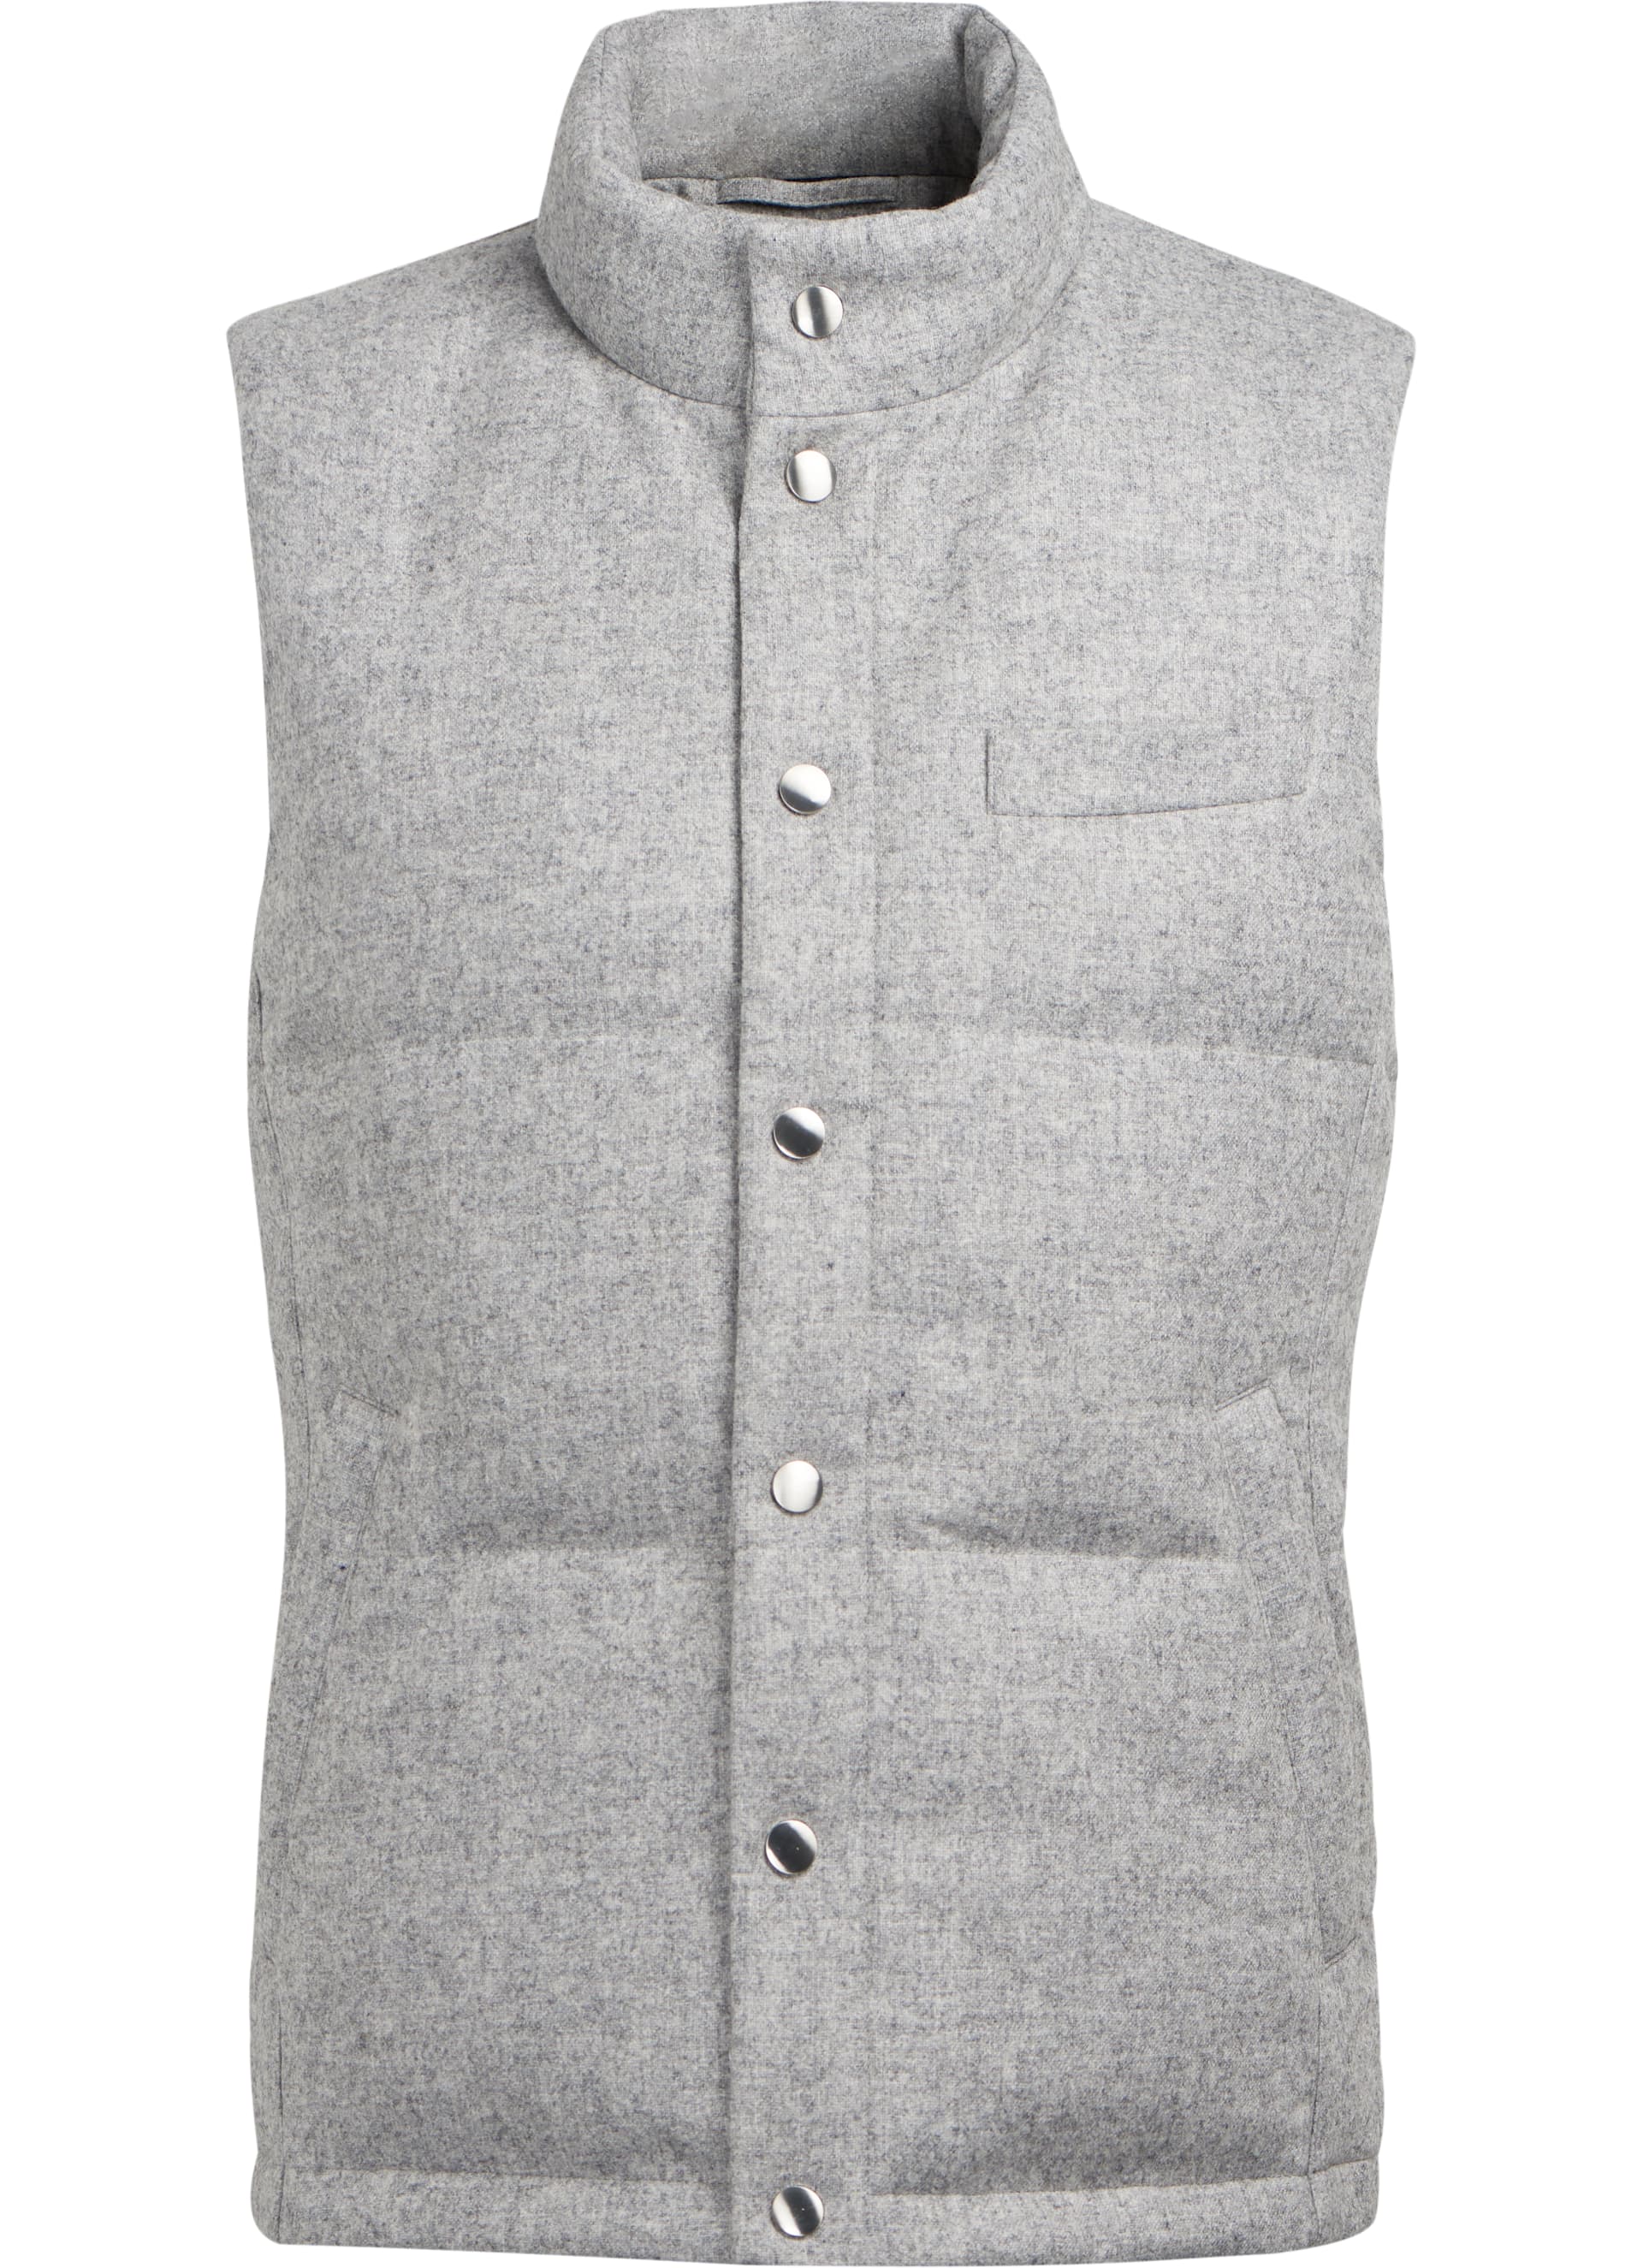 Light Grey Padded Vest Bw171i | Suitsupply Online Store